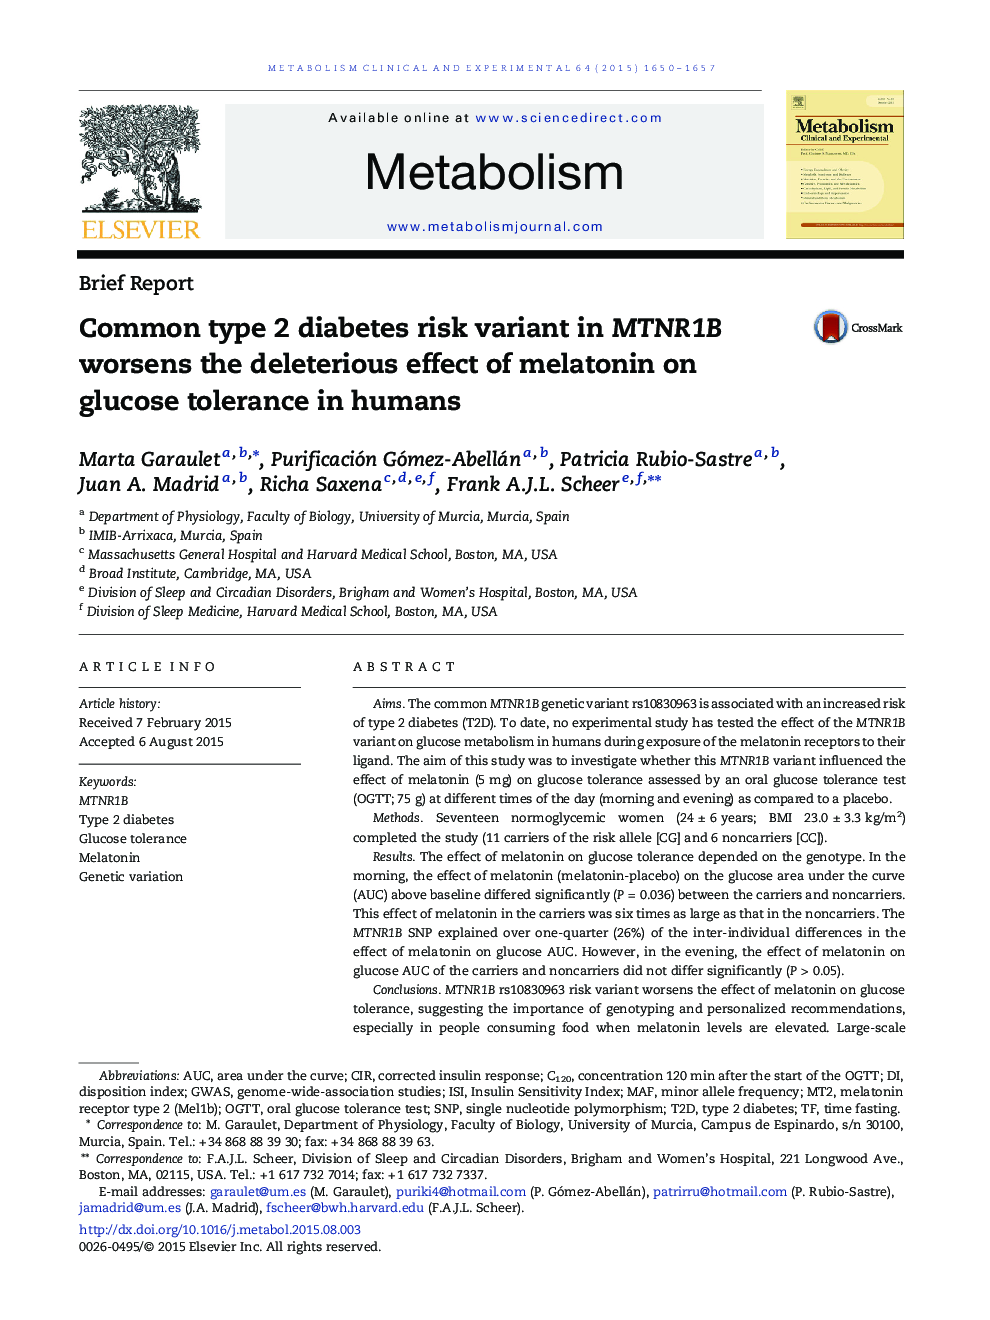 Common type 2 diabetes risk variant in MTNR1B worsens the deleterious effect of melatonin on glucose tolerance in humans